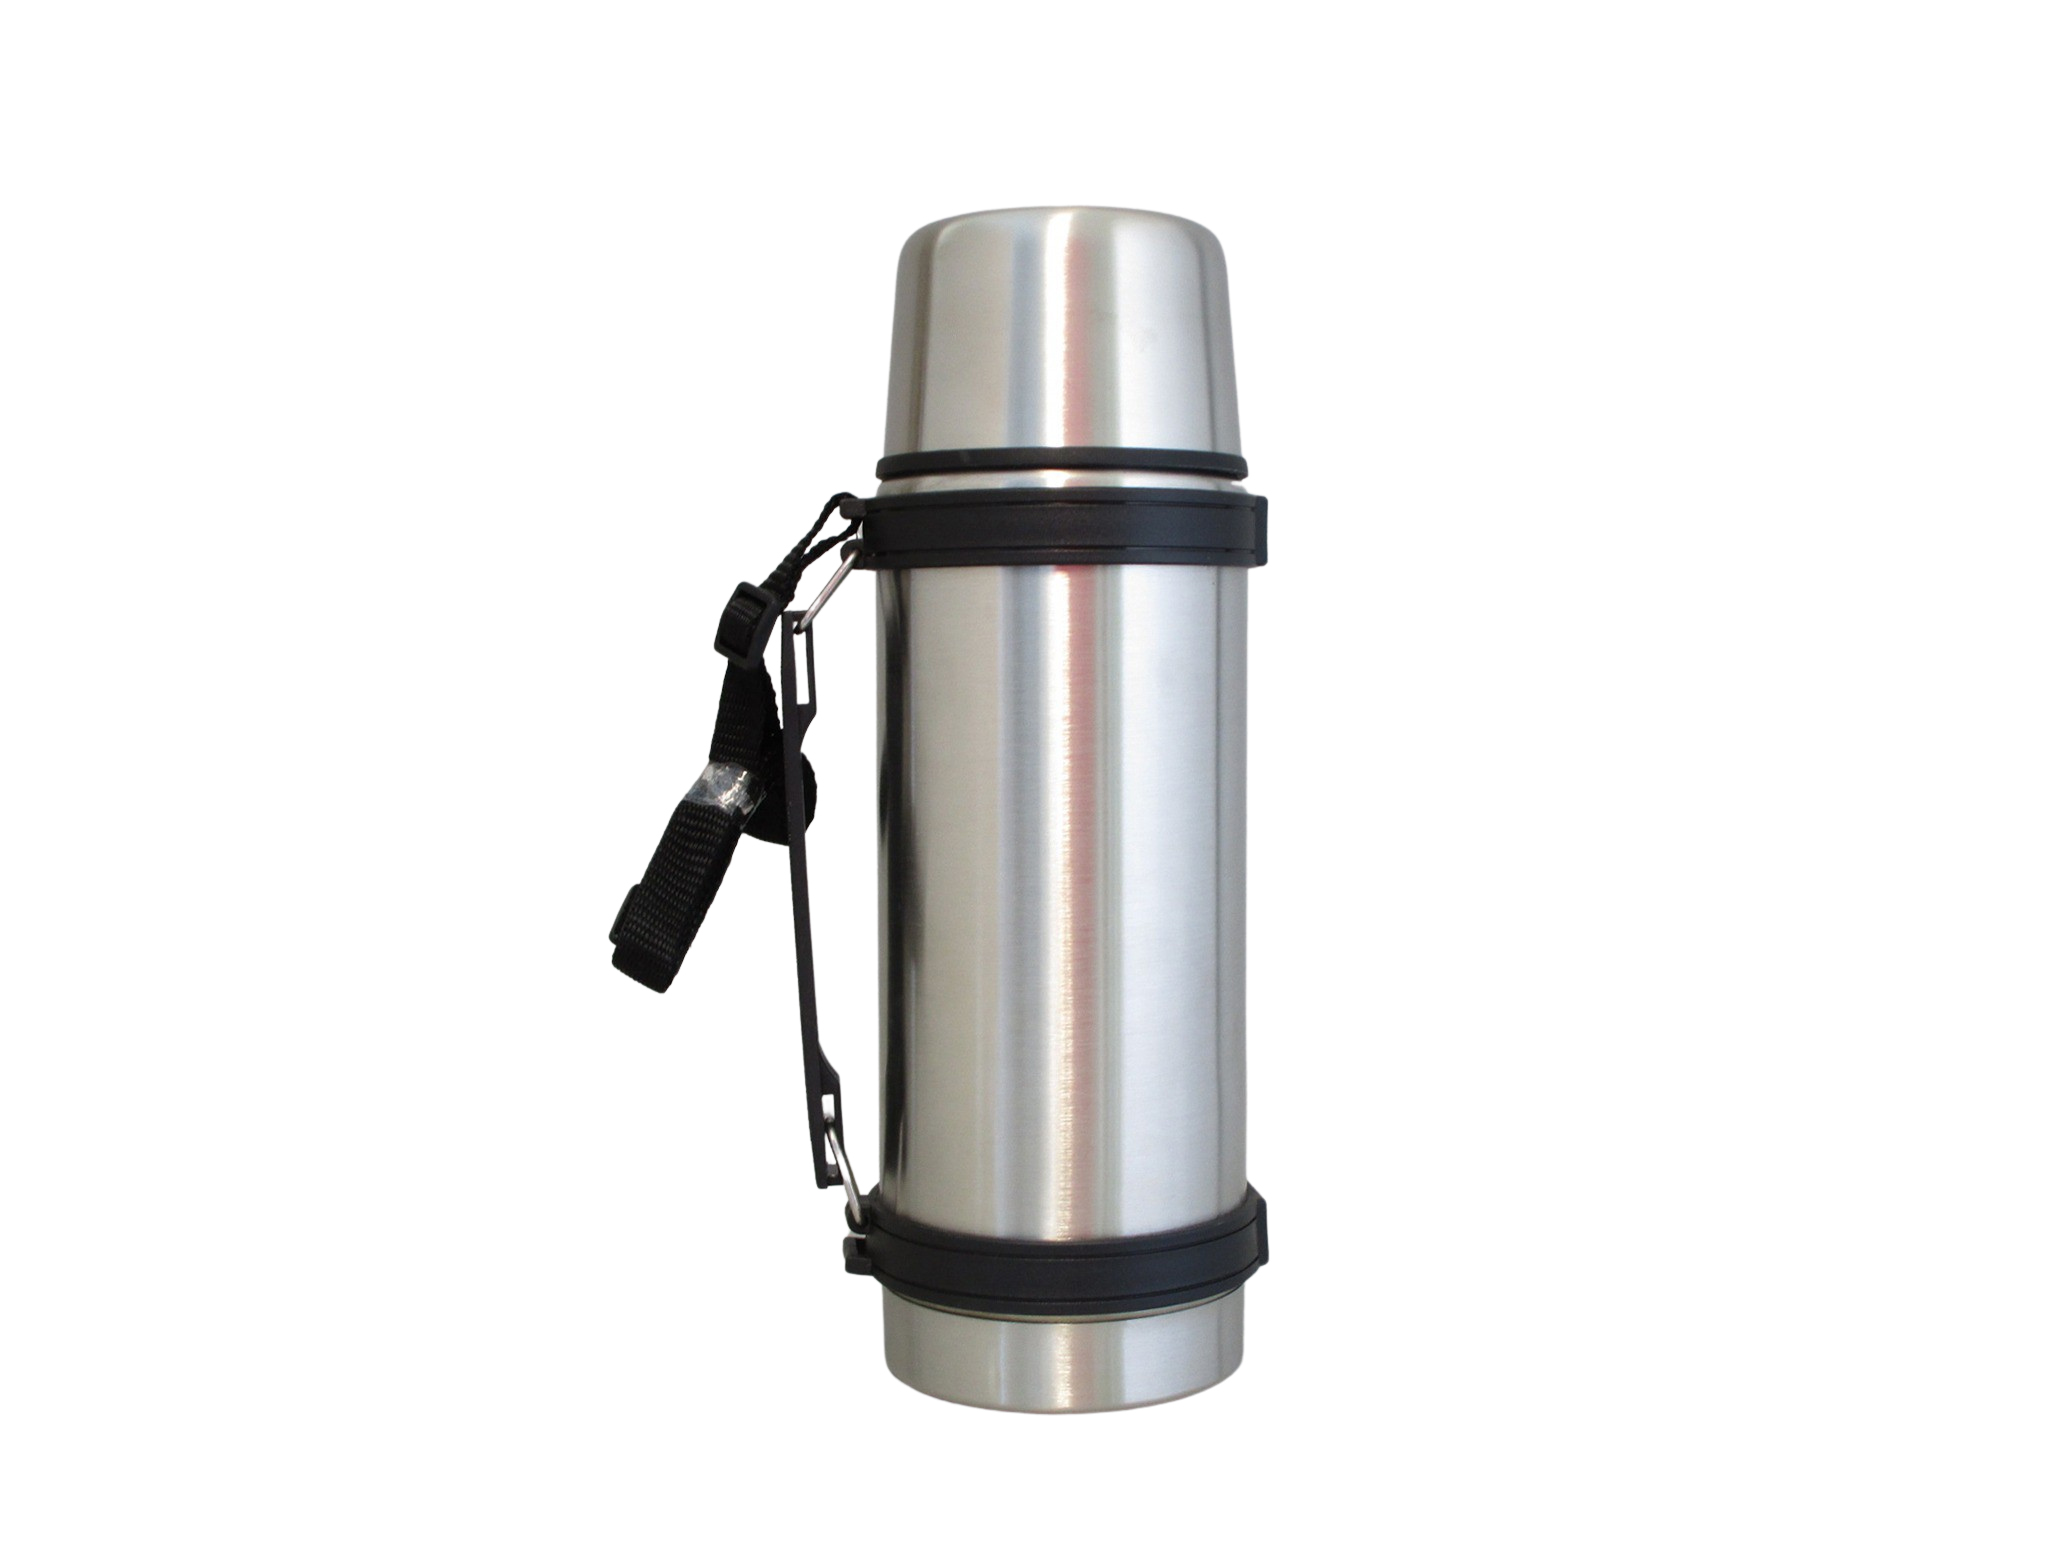 TSS10N-S02 - Vacuum flask SS unbreakable 1.0 L  (screw stopper) - Isobel Silver Line